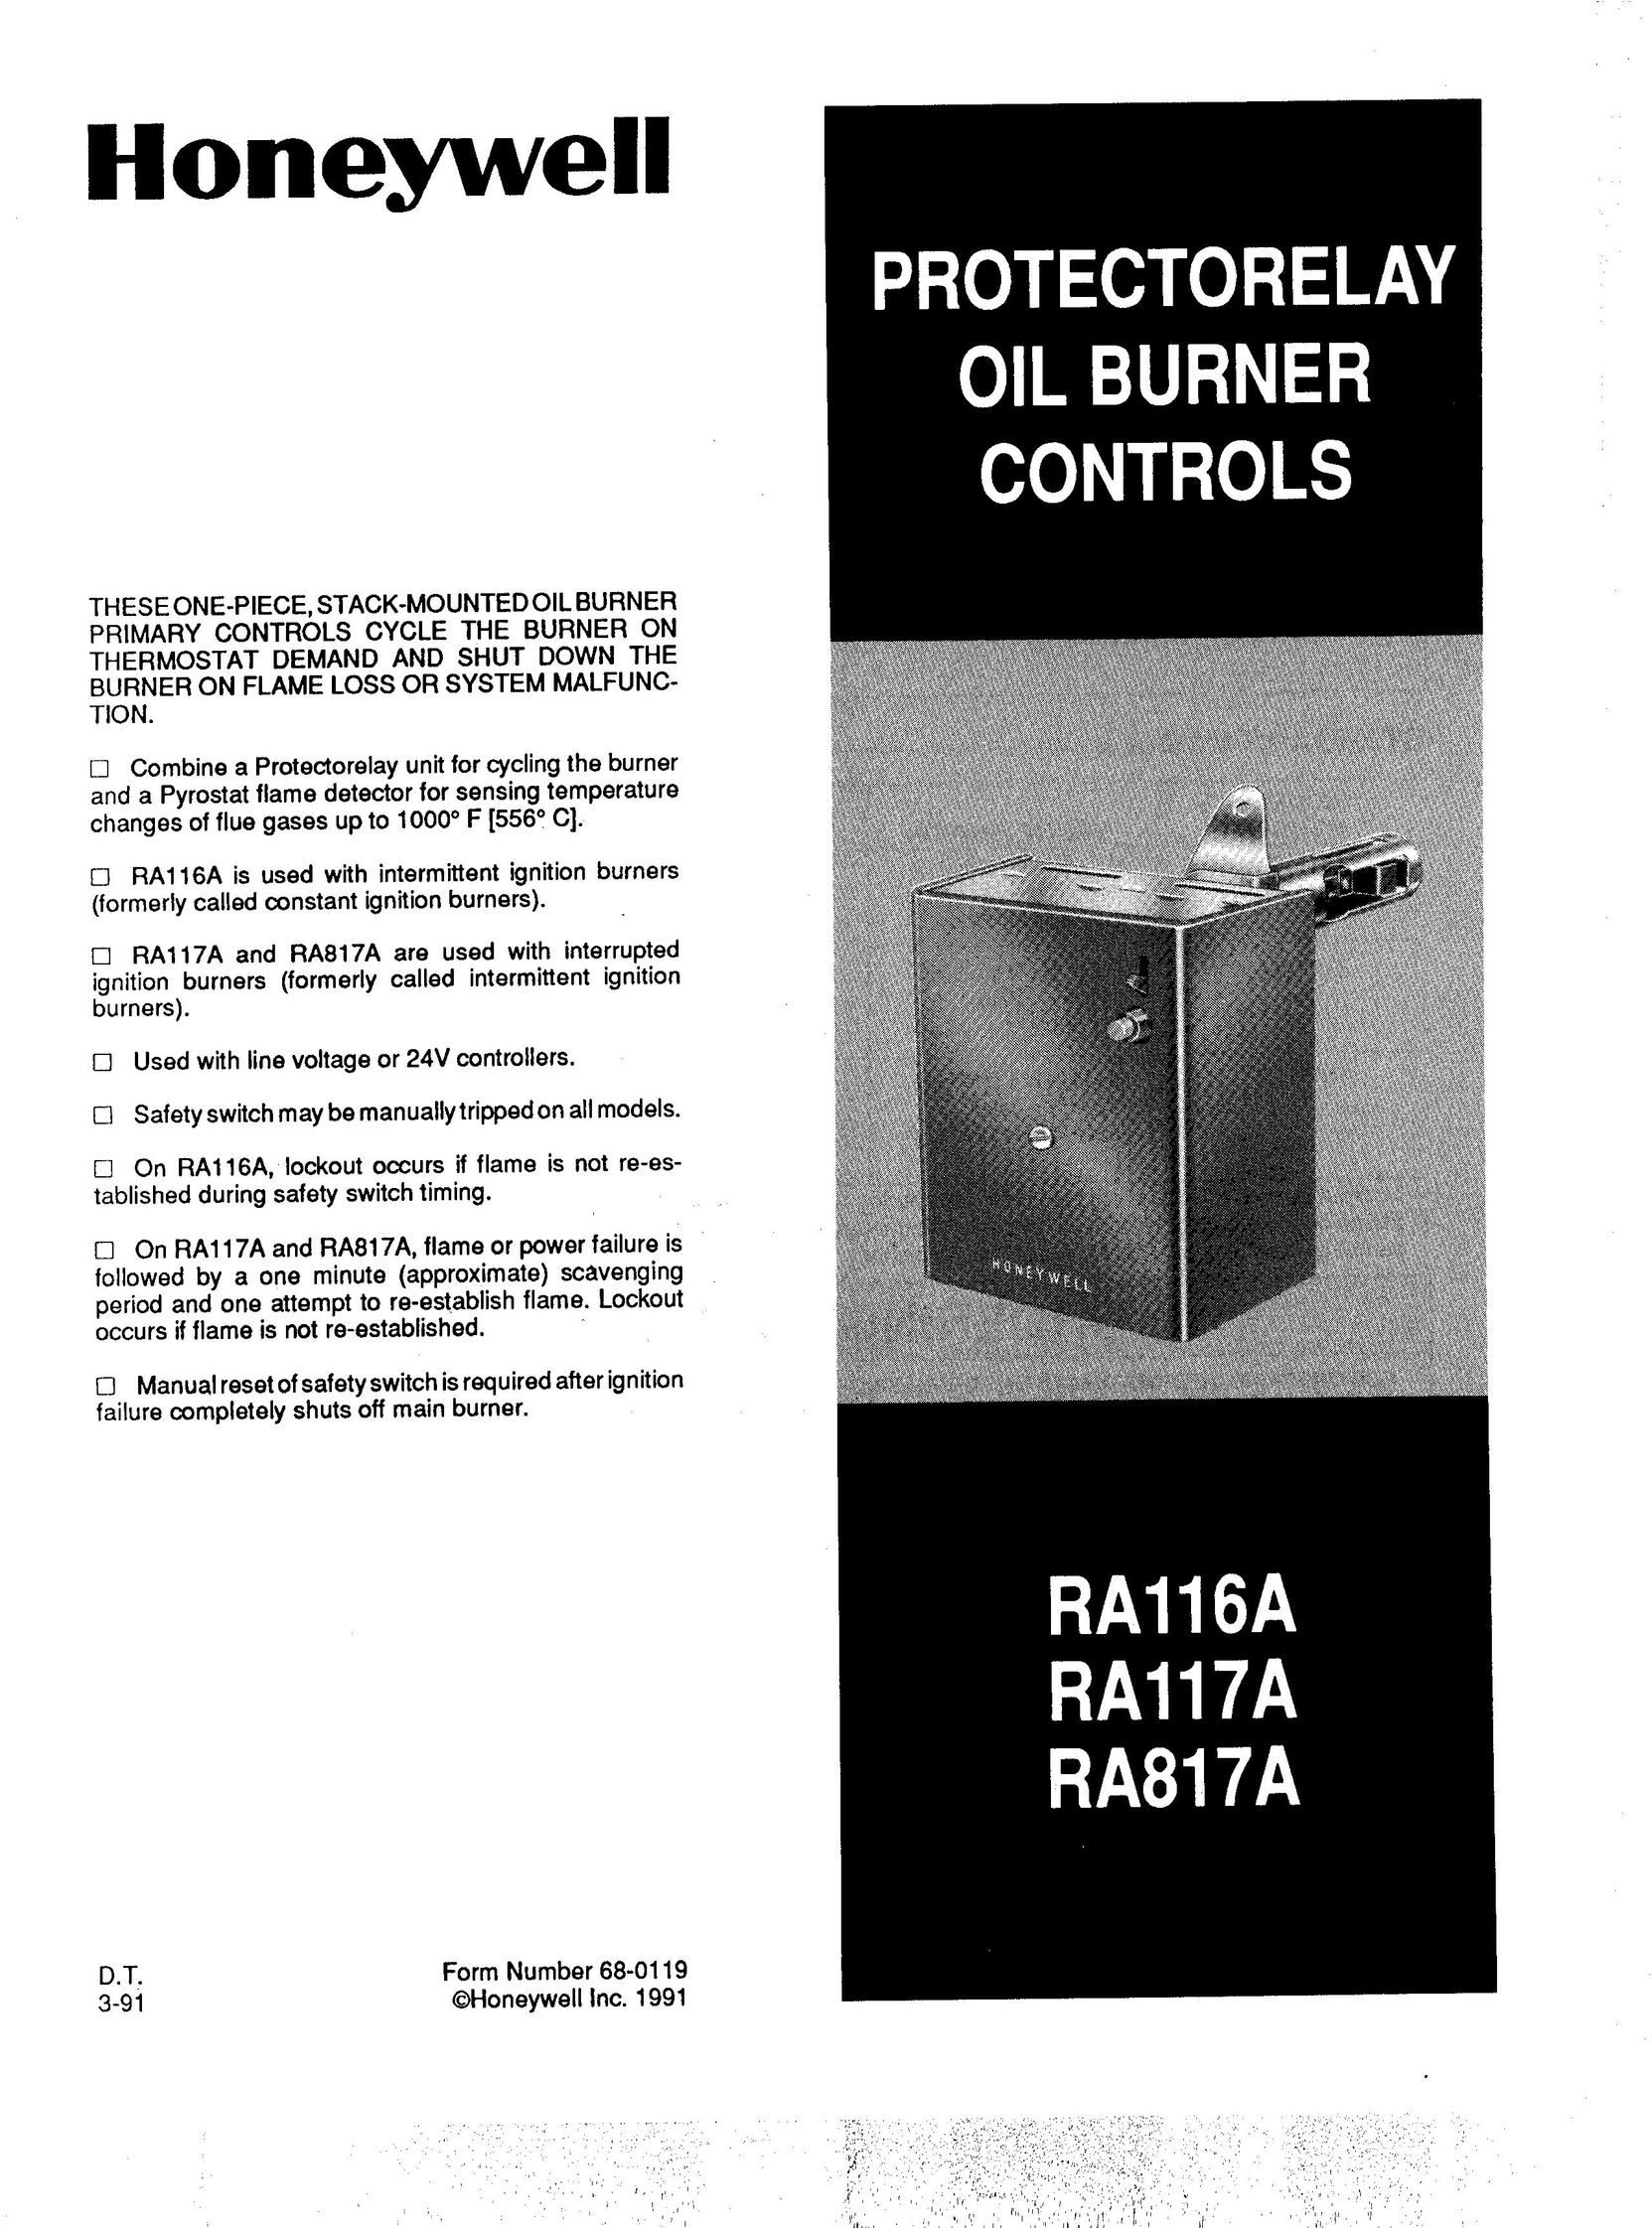 Honeywell RA117A Burner User Manual